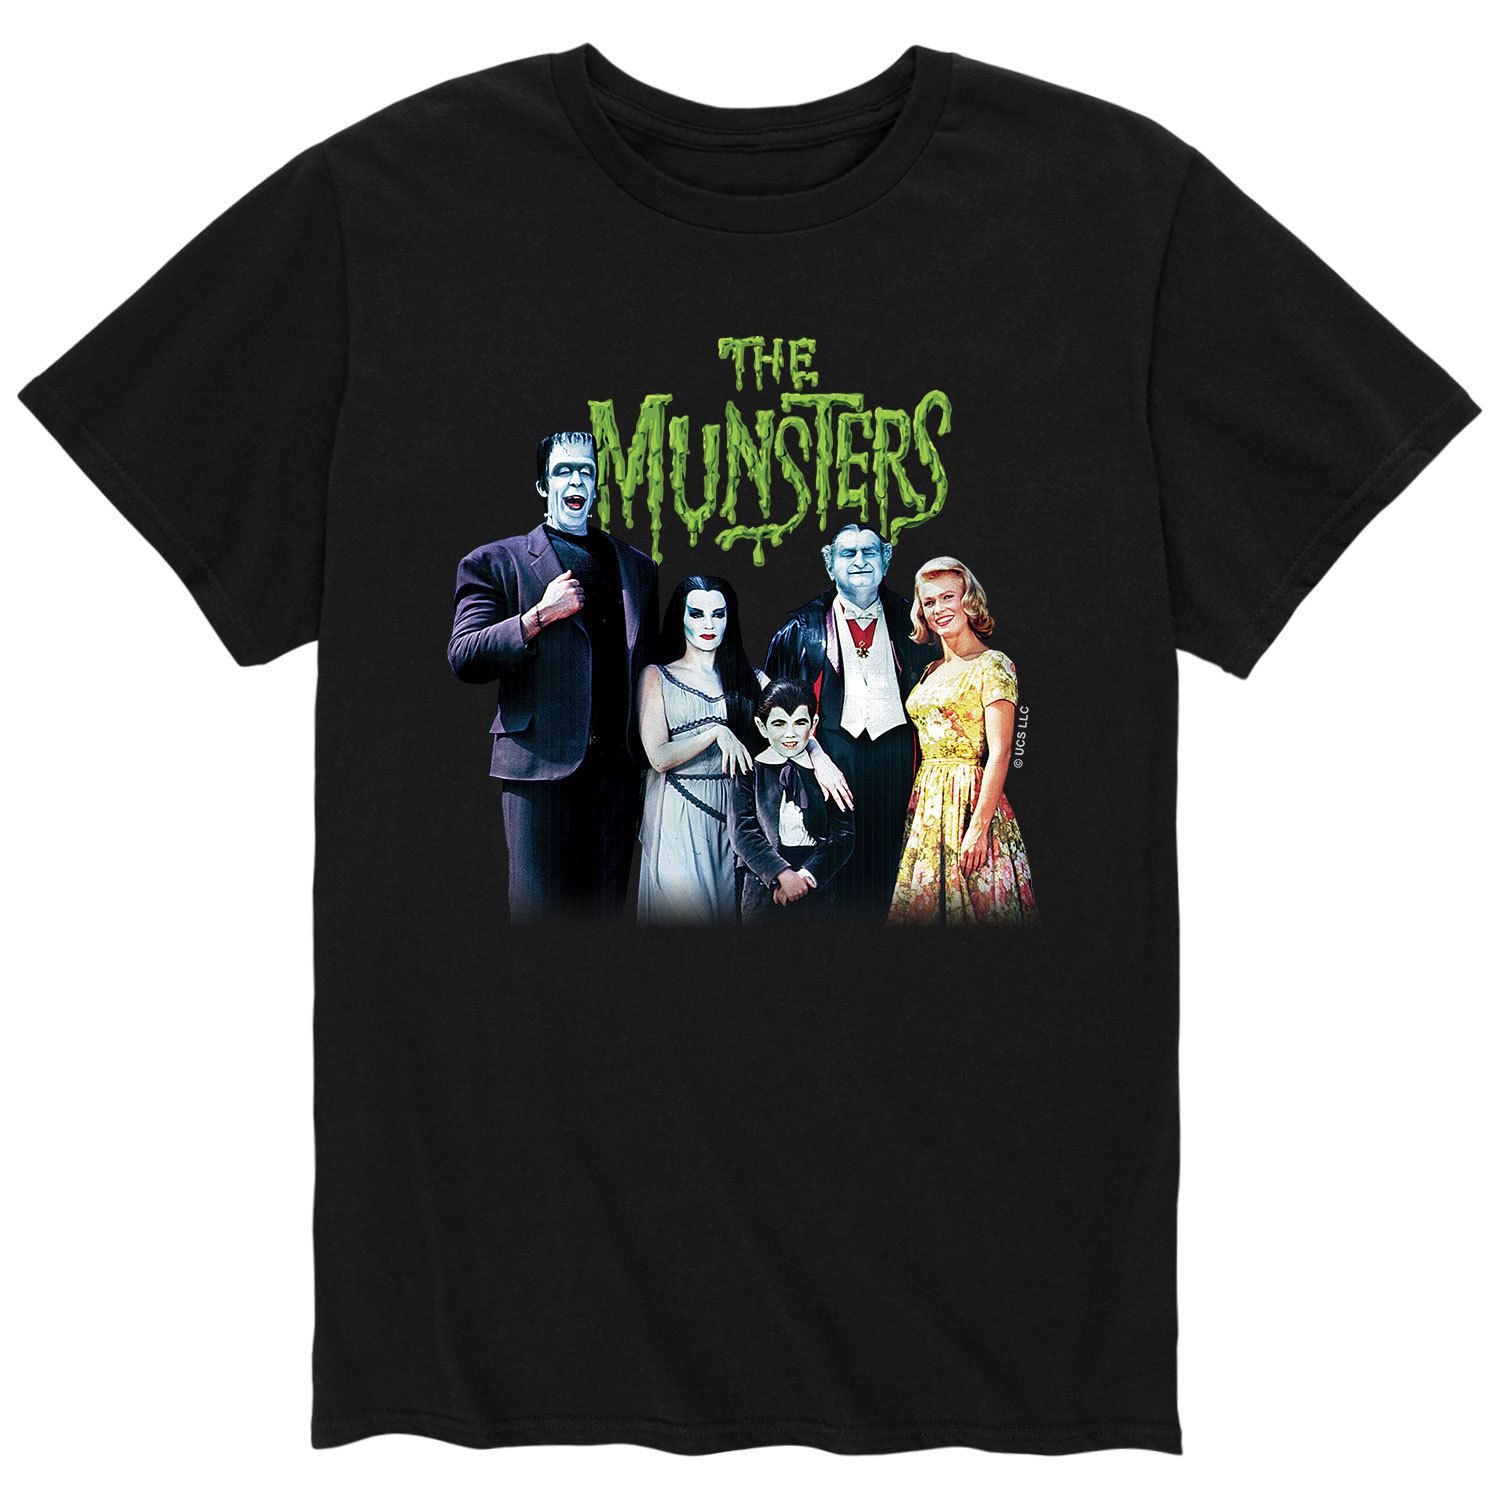 Мужская футболка с плакатом The Munsters Licensed Character